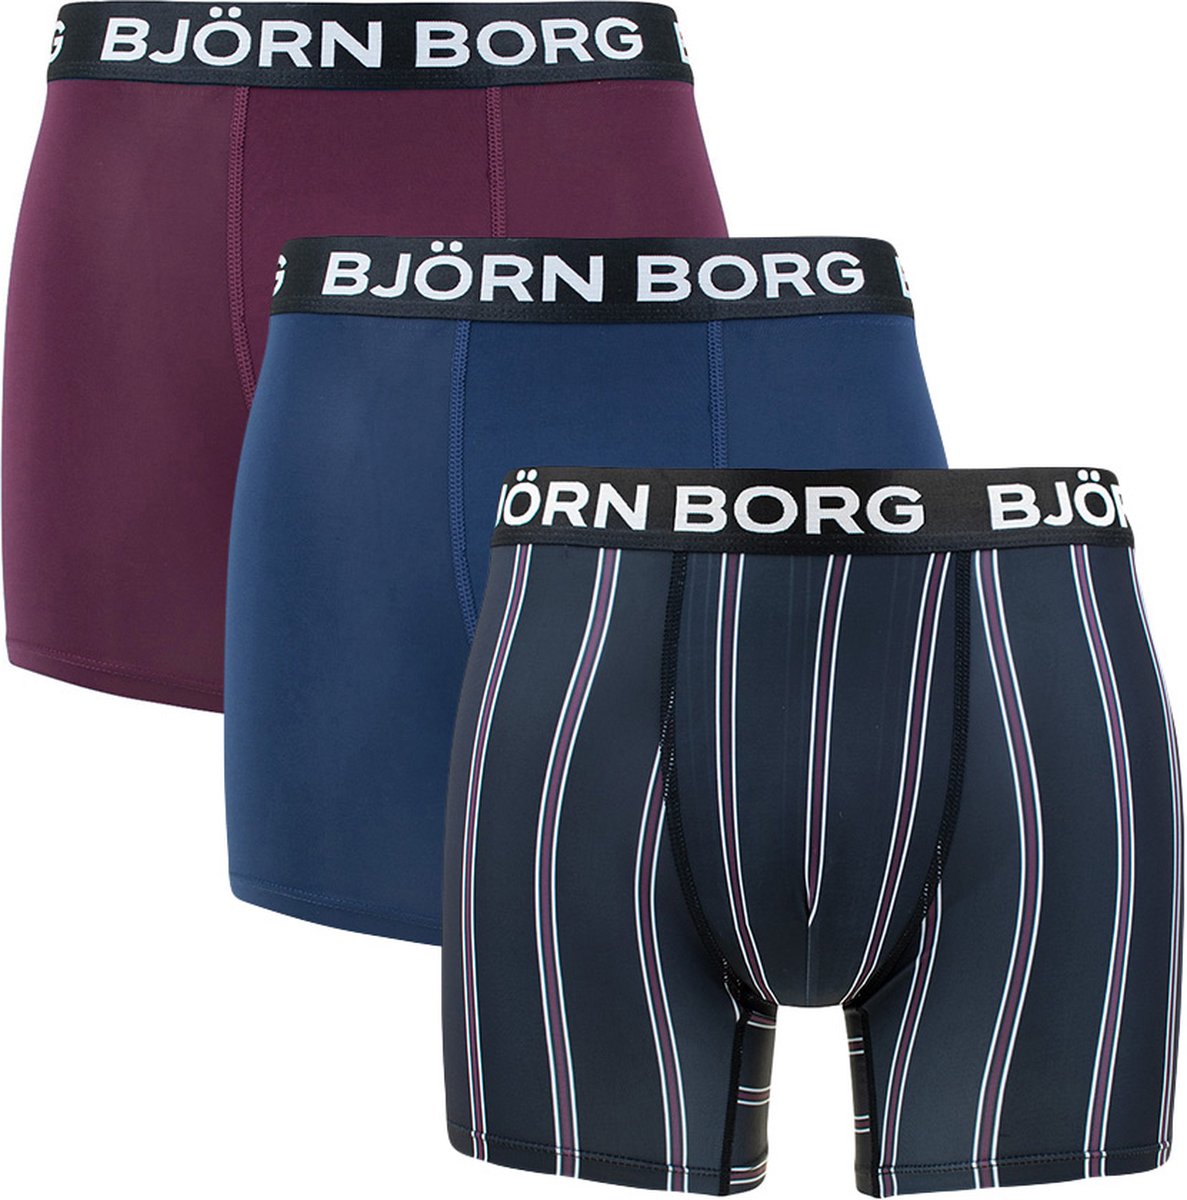 Björn Borg performance 3P boxers stripe multi - S